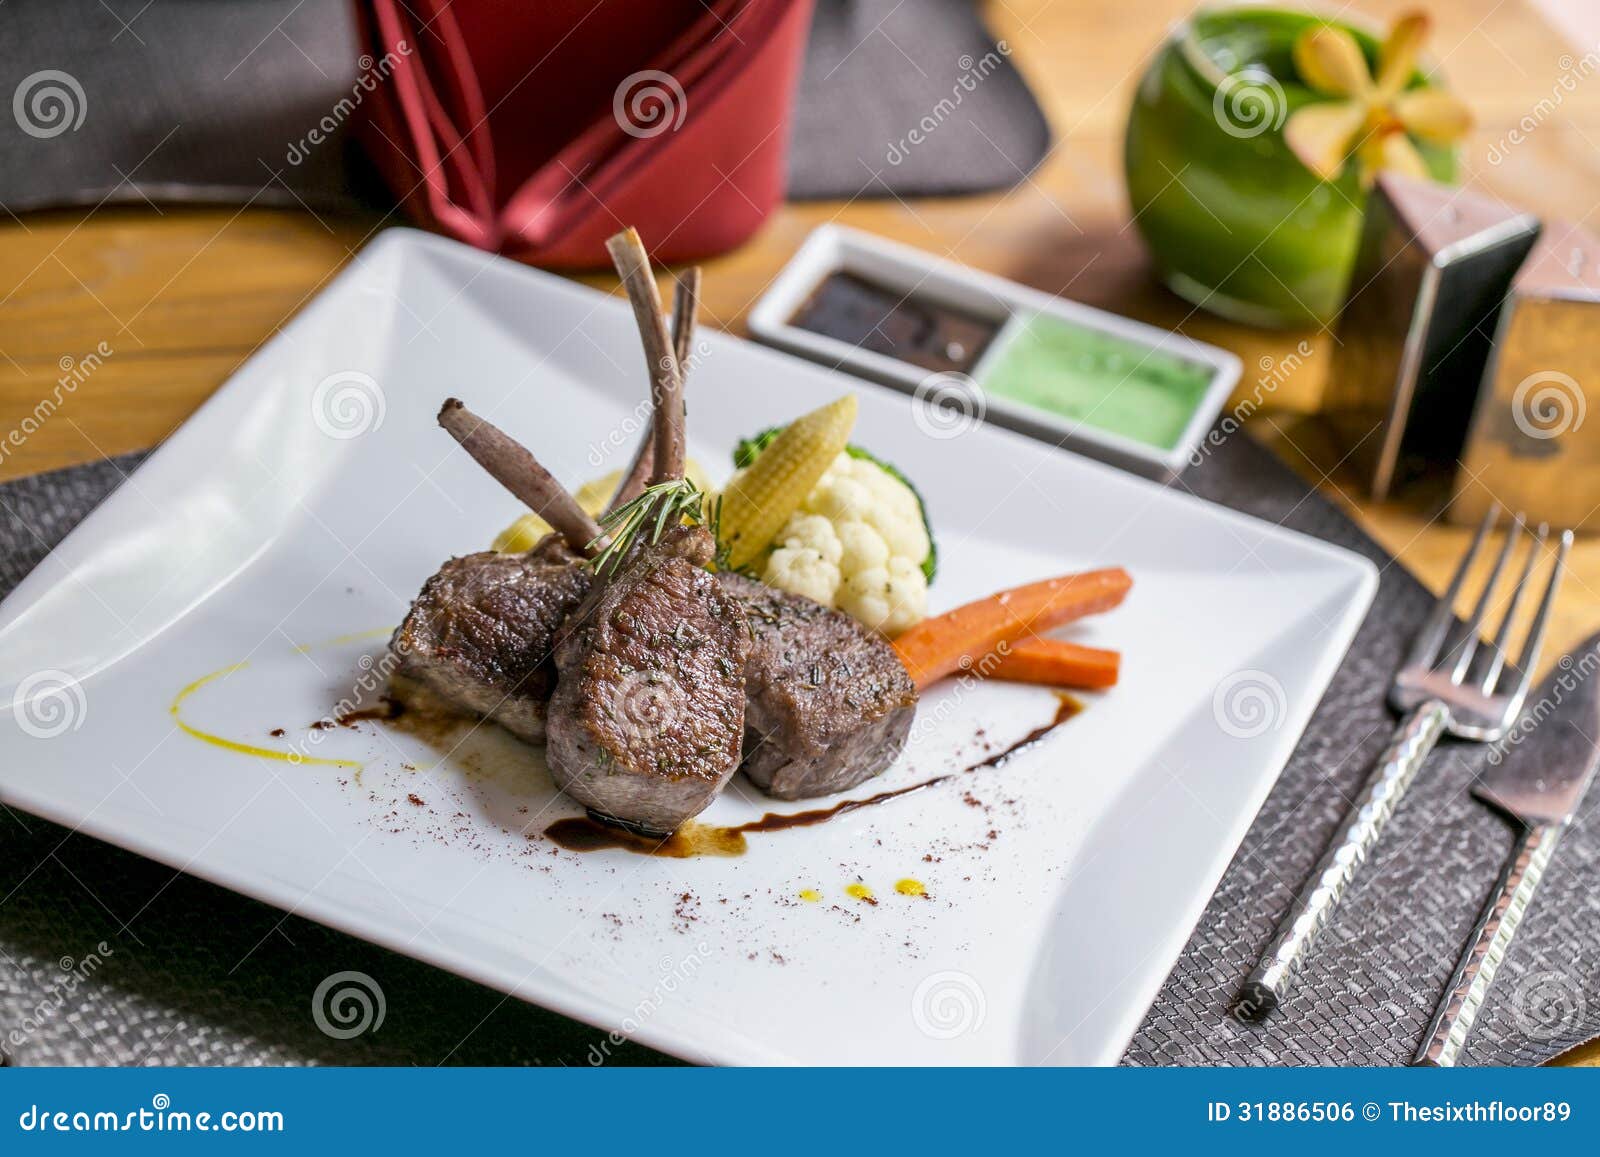 lamb chop steak